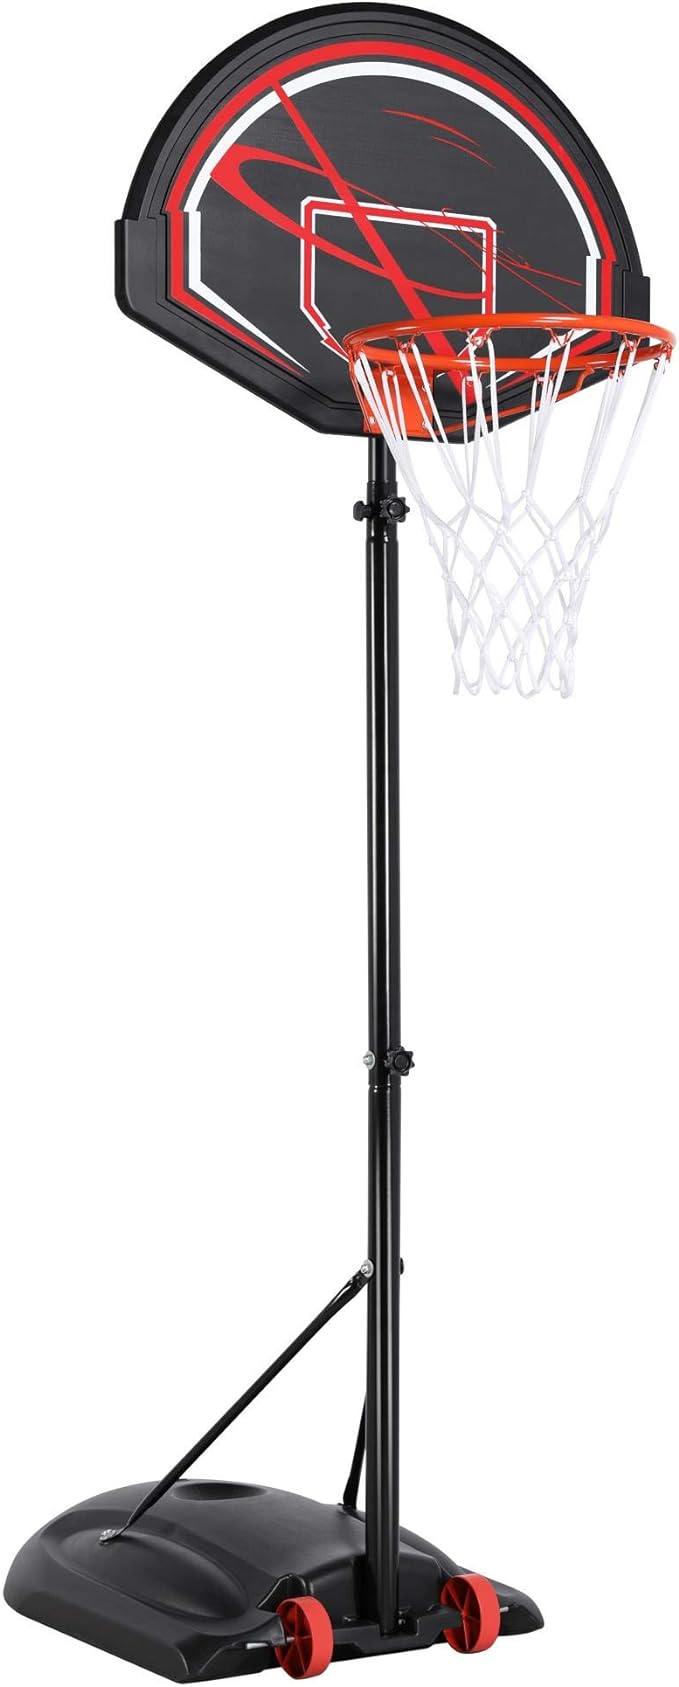 yaheetech 32 youth portable basketball hoop 7-9ft adjustable height  ?yaheetech b08cdxky33